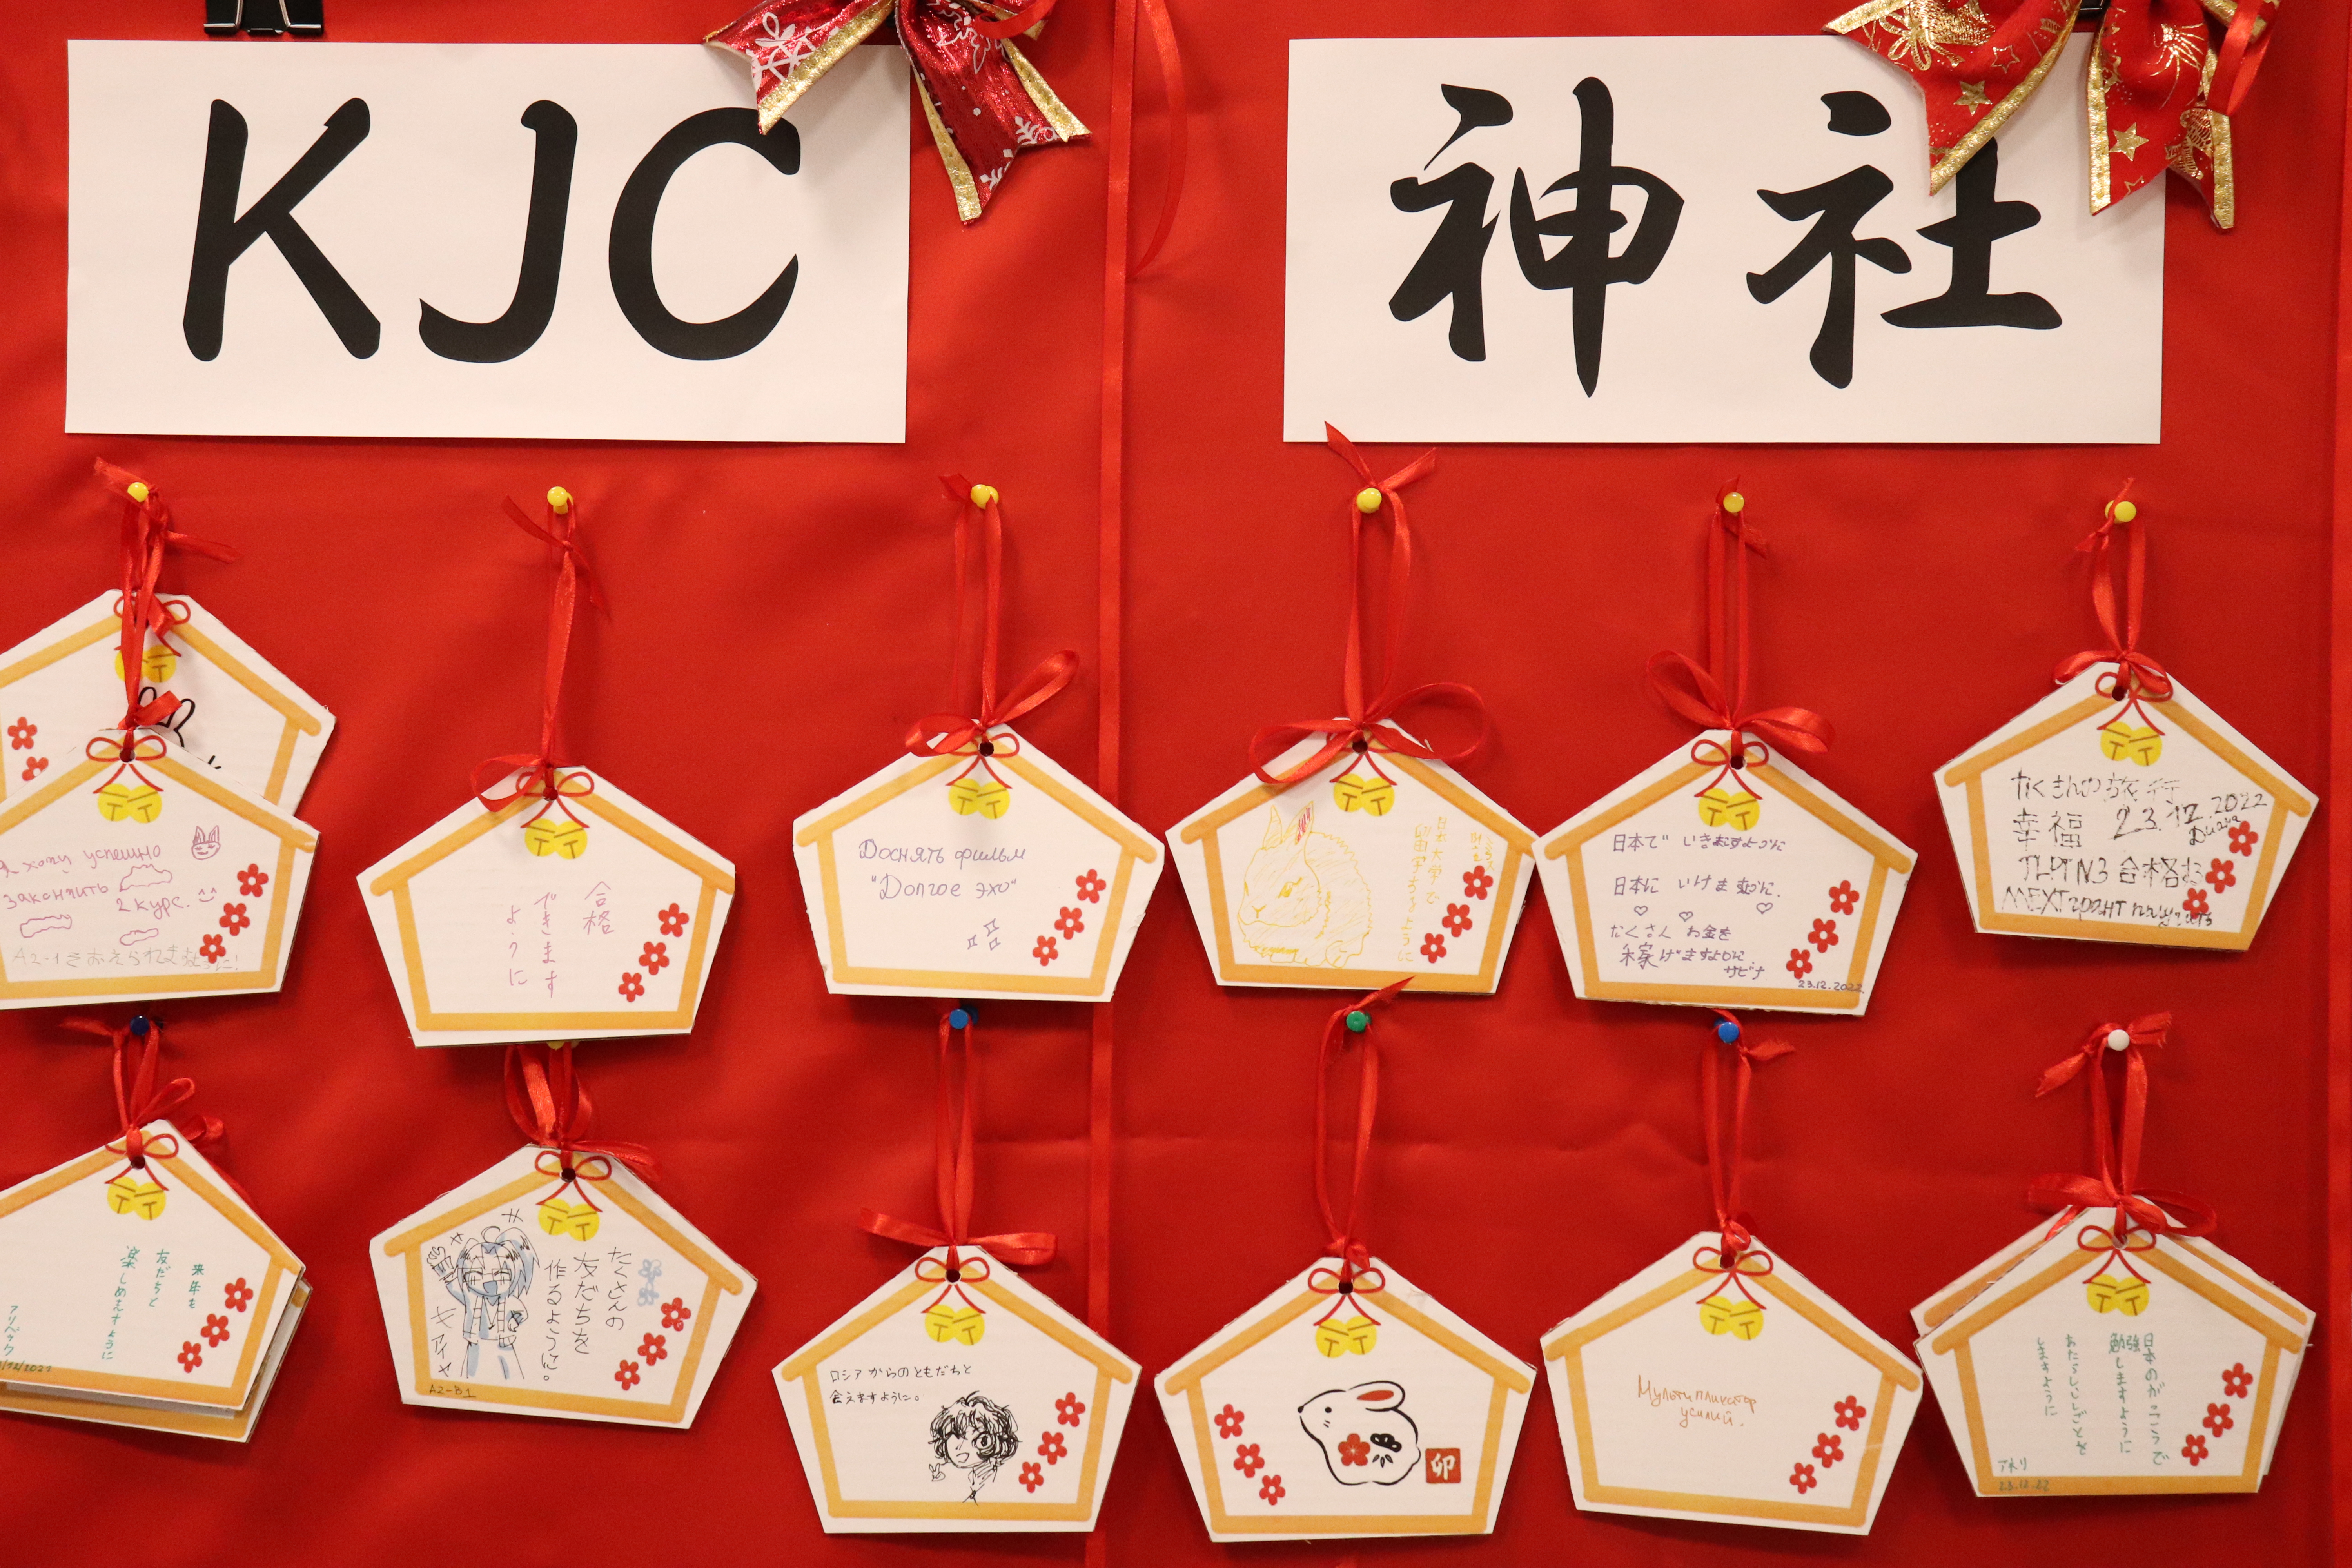 JAPAN CLUBで学生が願い事を書いた絵馬の写真